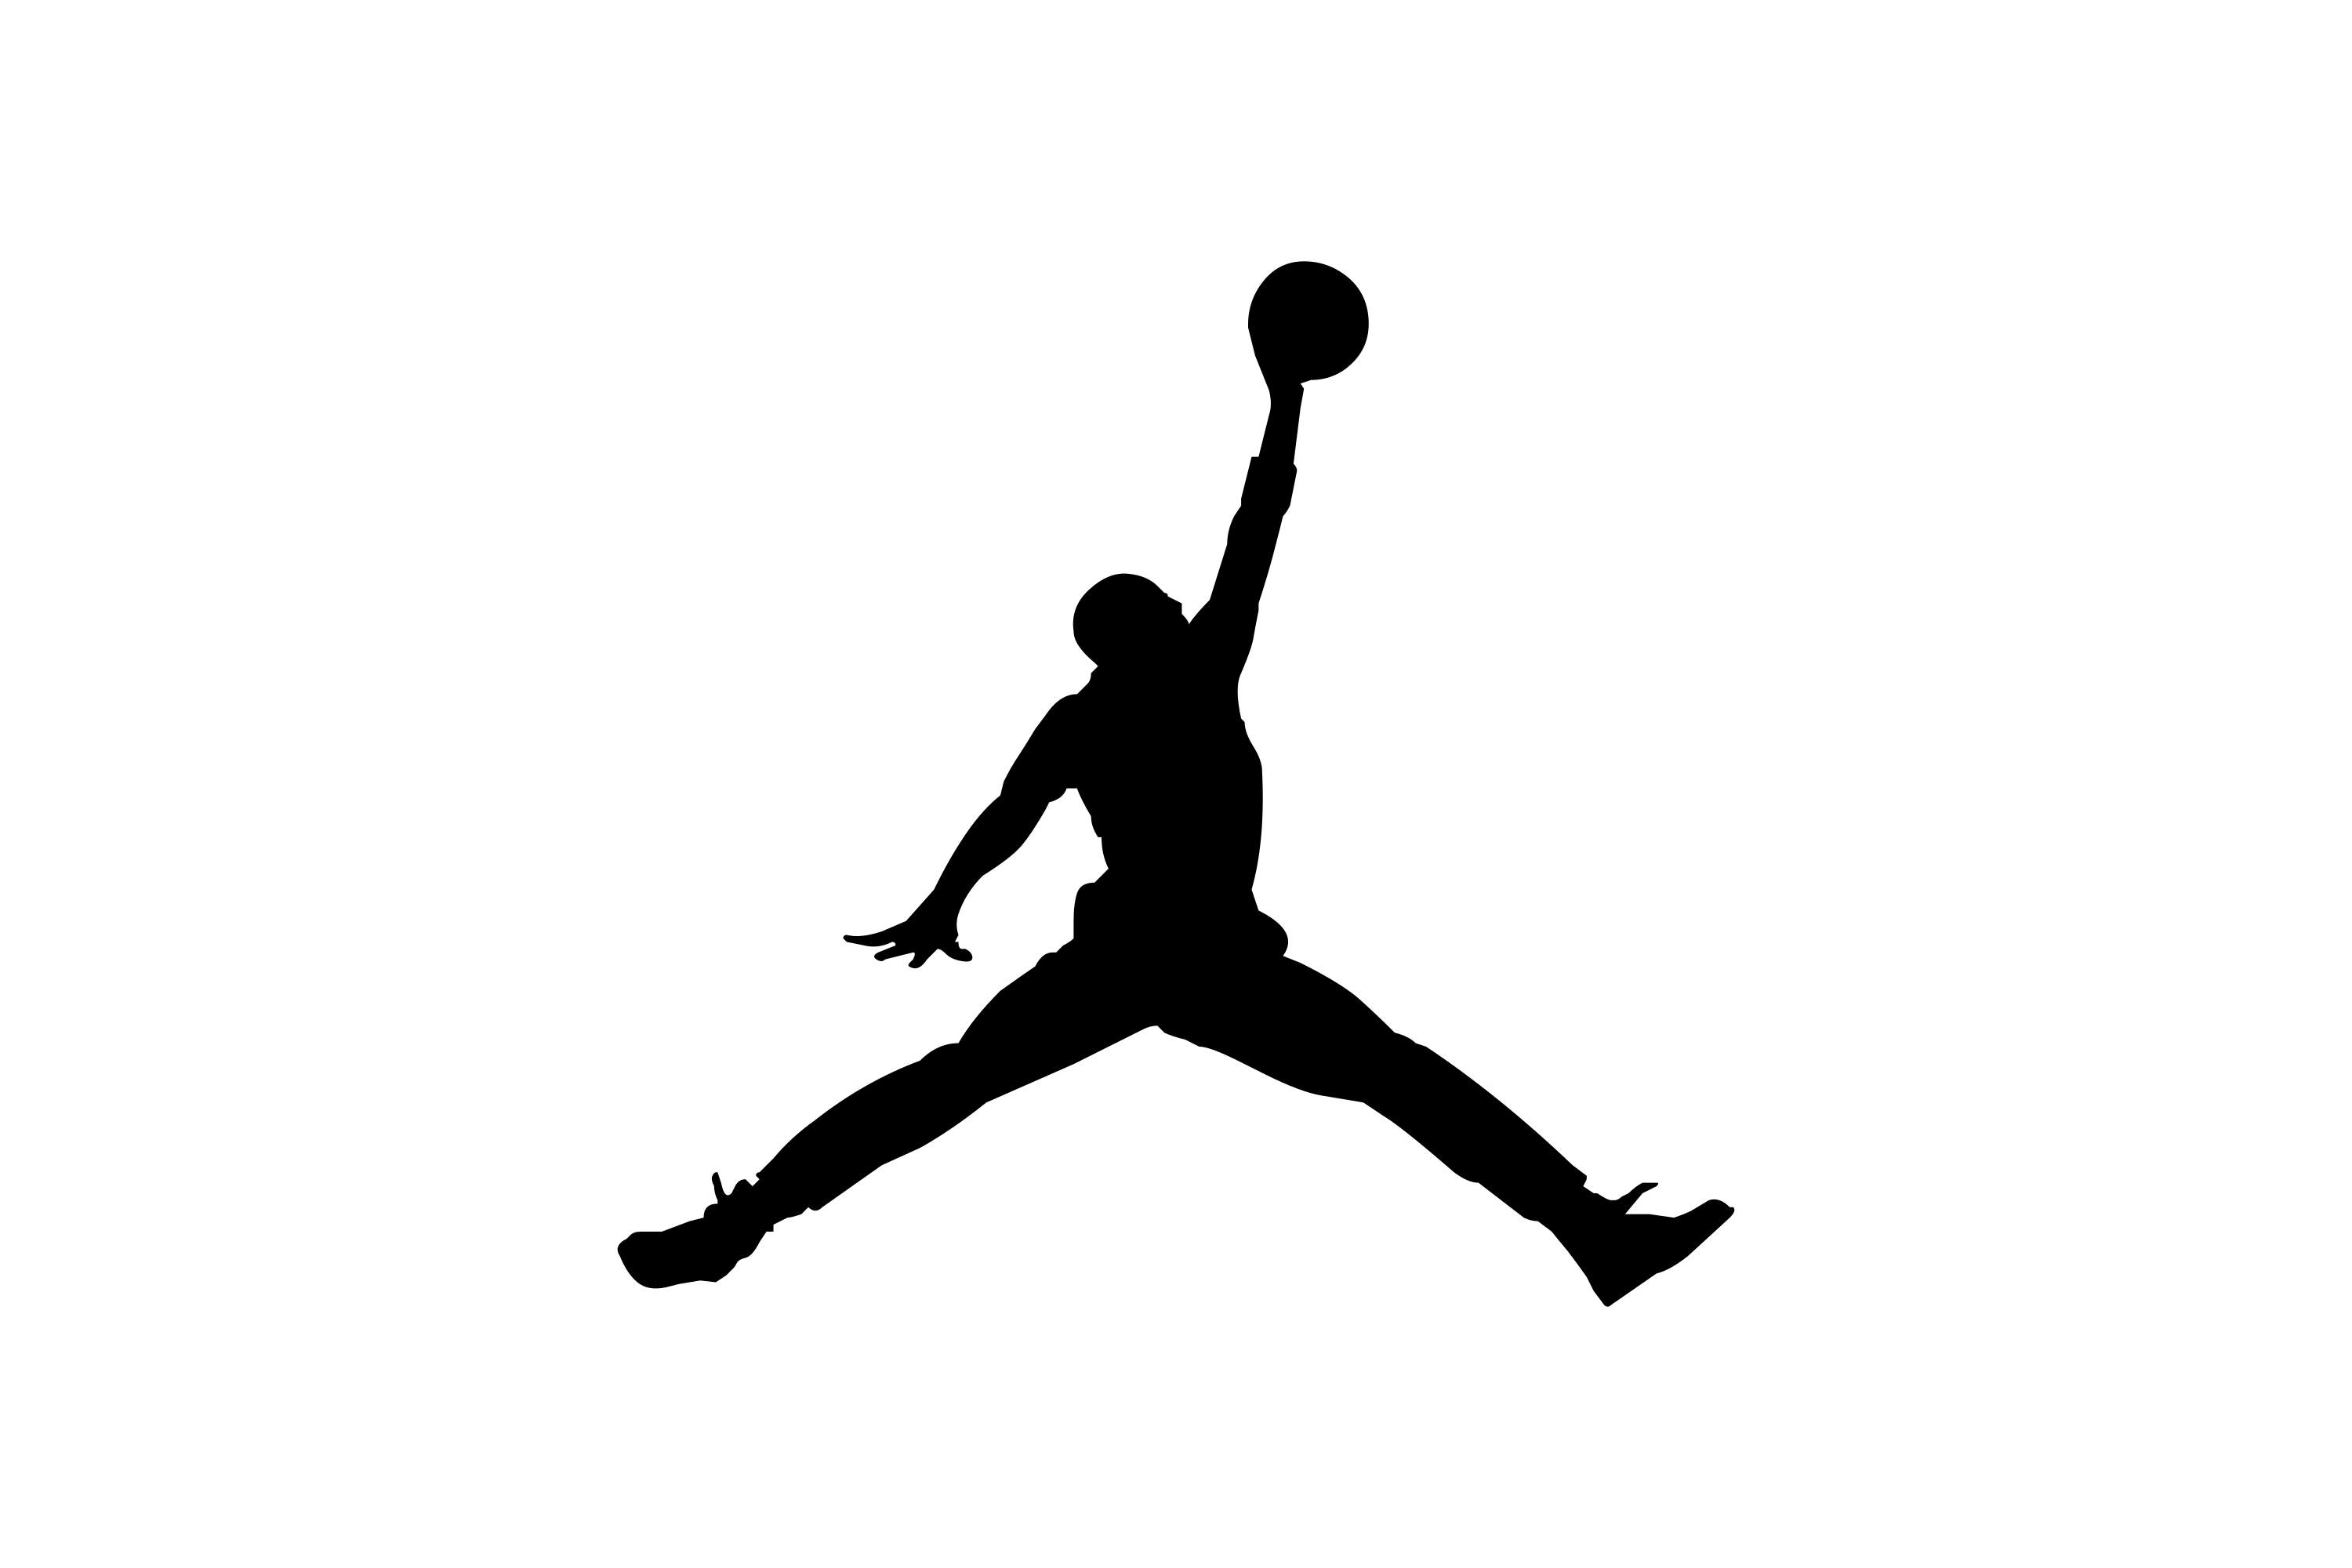 Download Air Jordan product line Logo in SVG Vector or PNG File Format